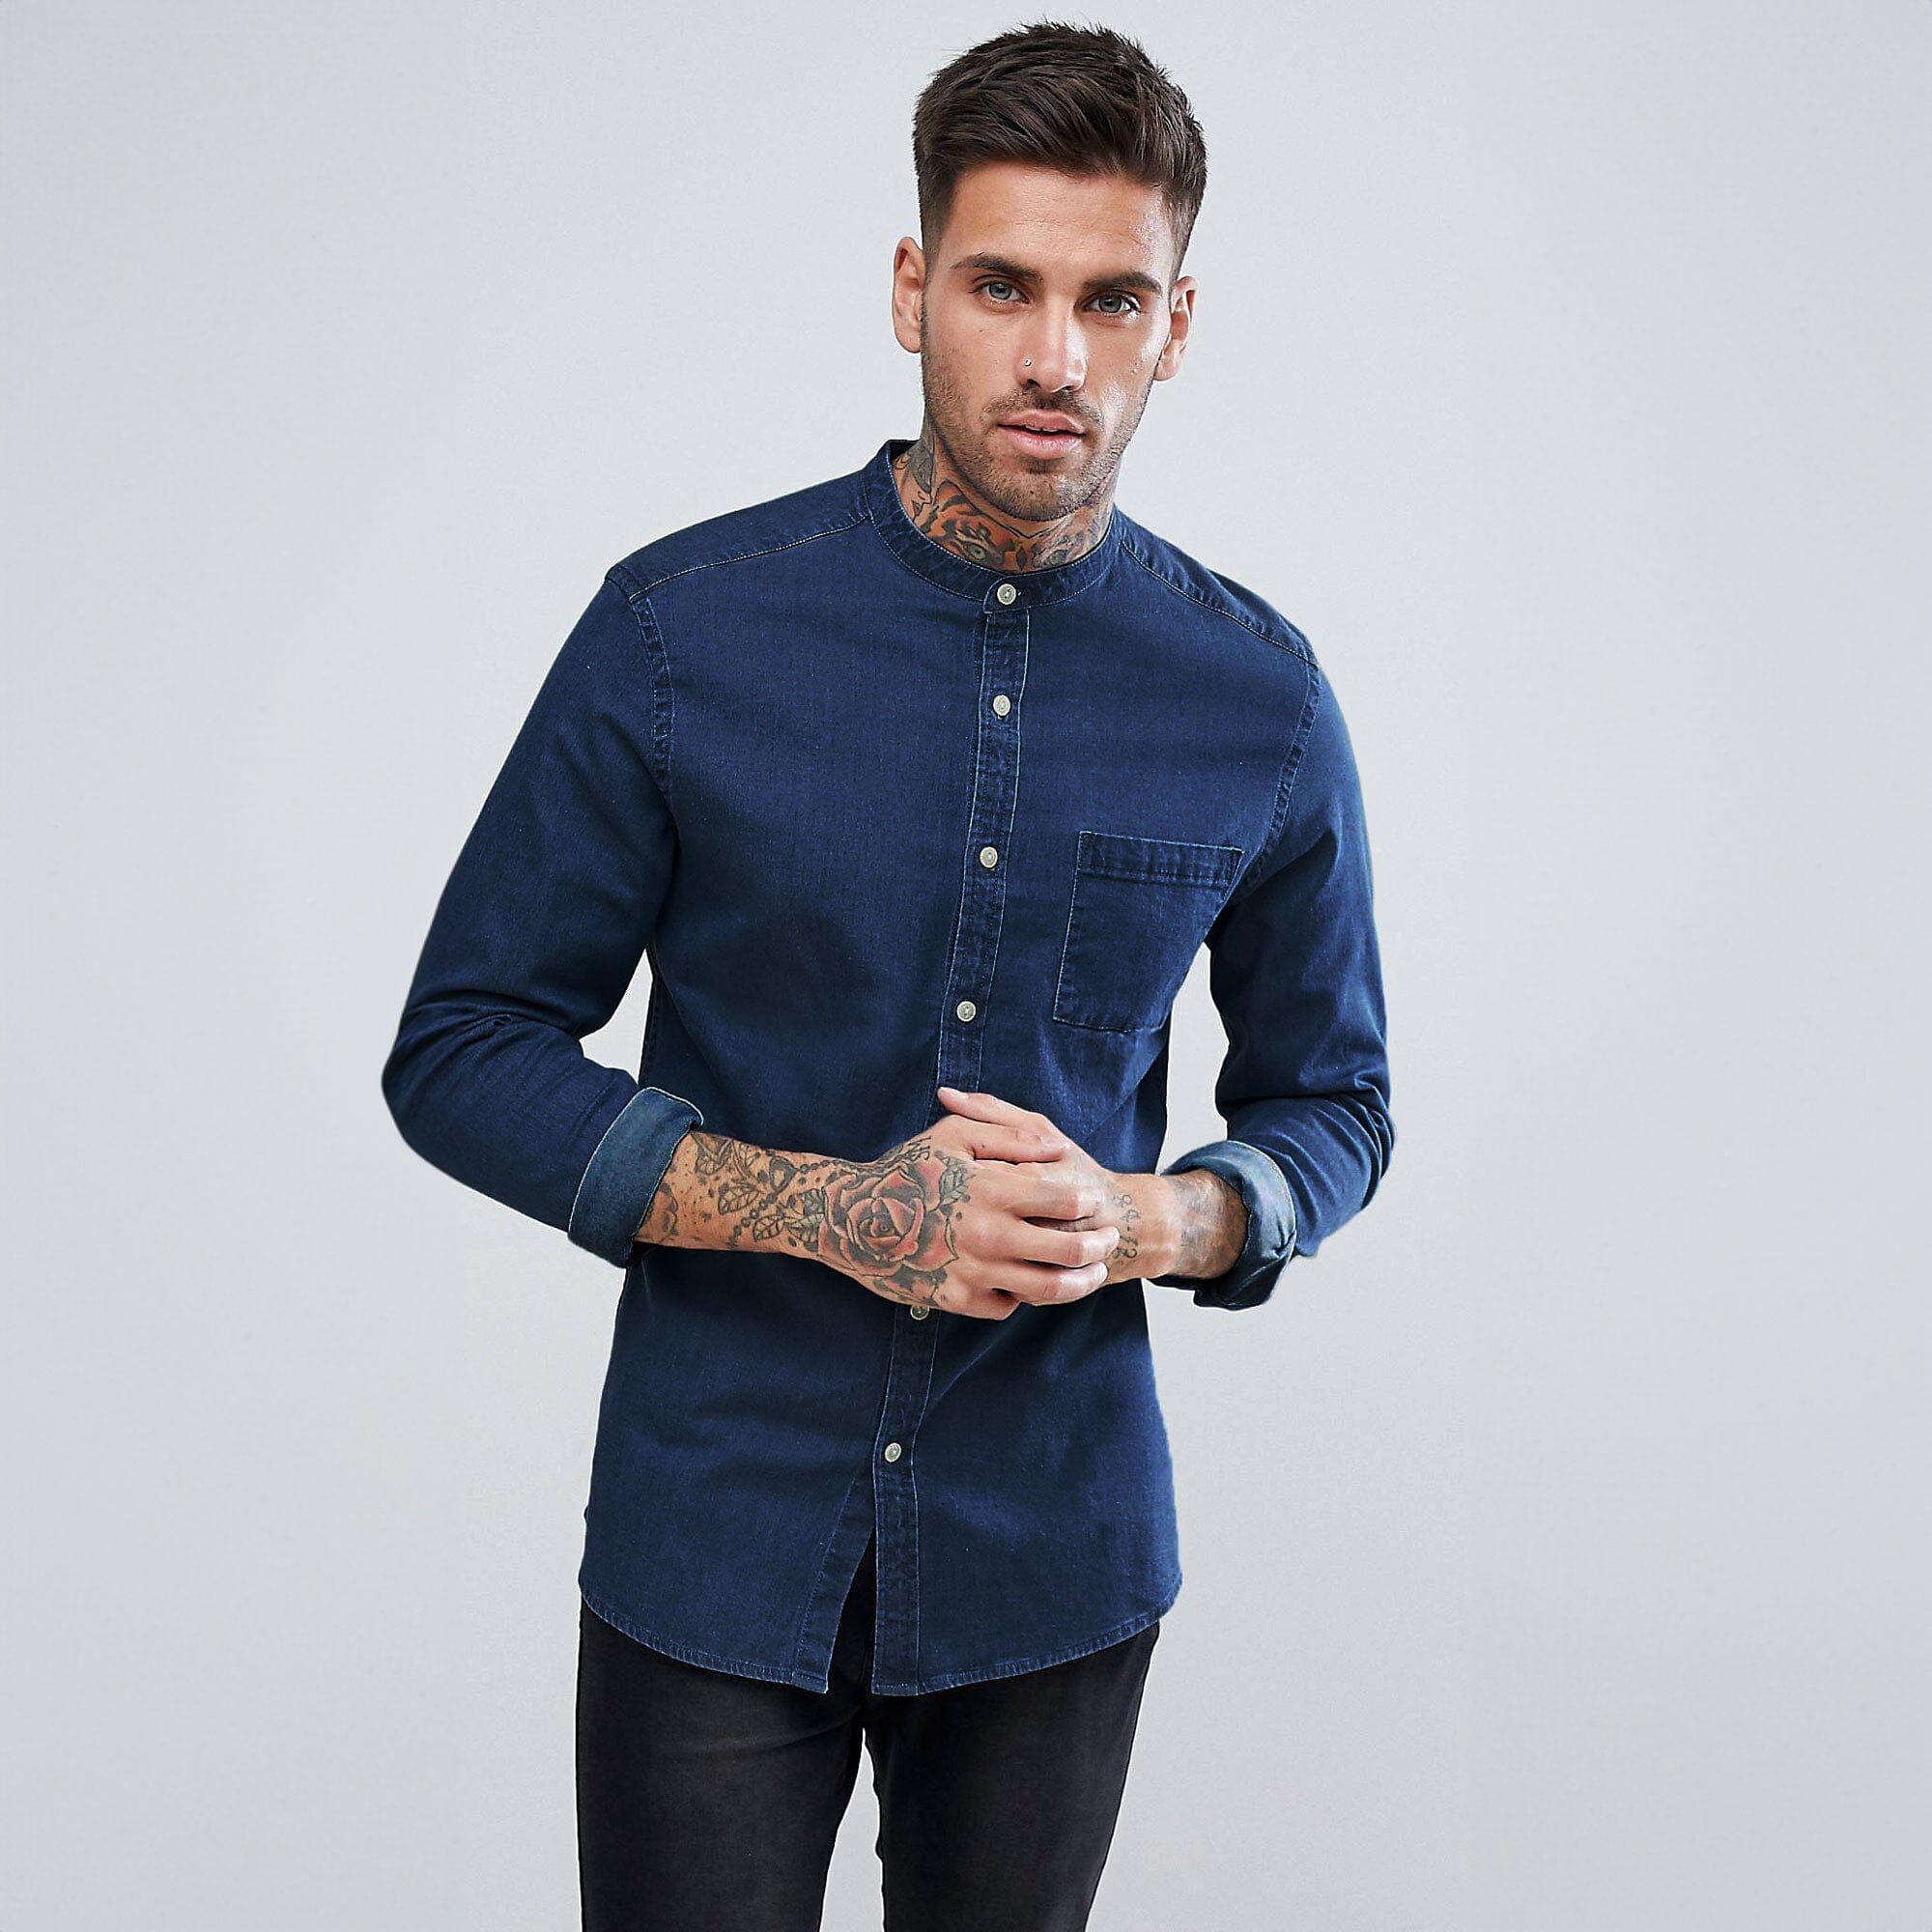 Men Mandarin Collar Cotton Chinese Denim Shirt Pocket Short Sleeve Jean Top  Blue | eBay